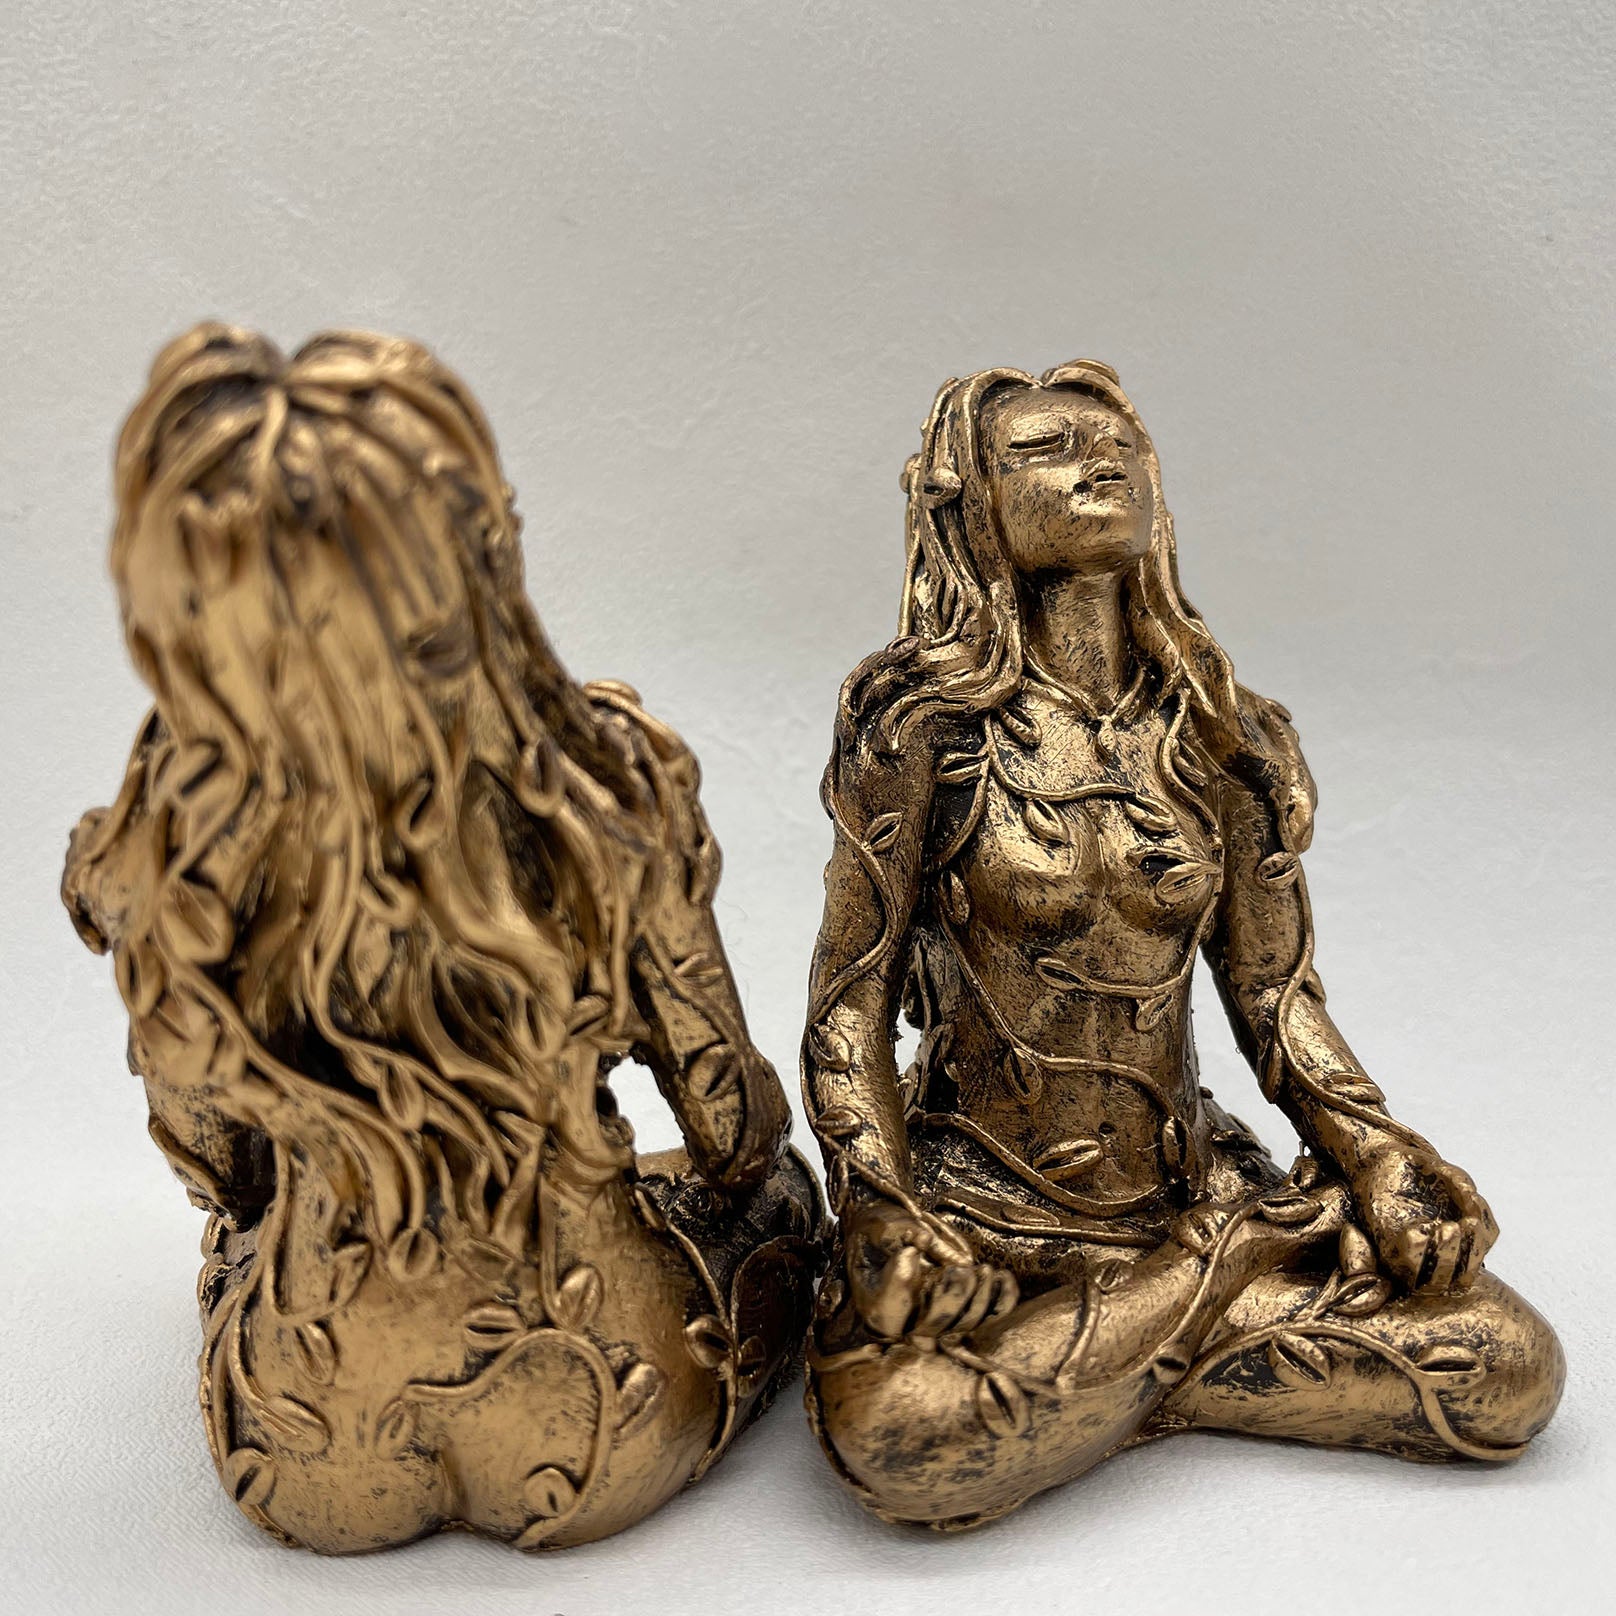 Zen Decor Ideas - Mother Earth Statue Mini Gaia Fairy Decorative Buddha Statue Decorative Figurines Goddess - Healing Chakra Meditation Home Decor - Personal Hour for Yoga and Meditations 